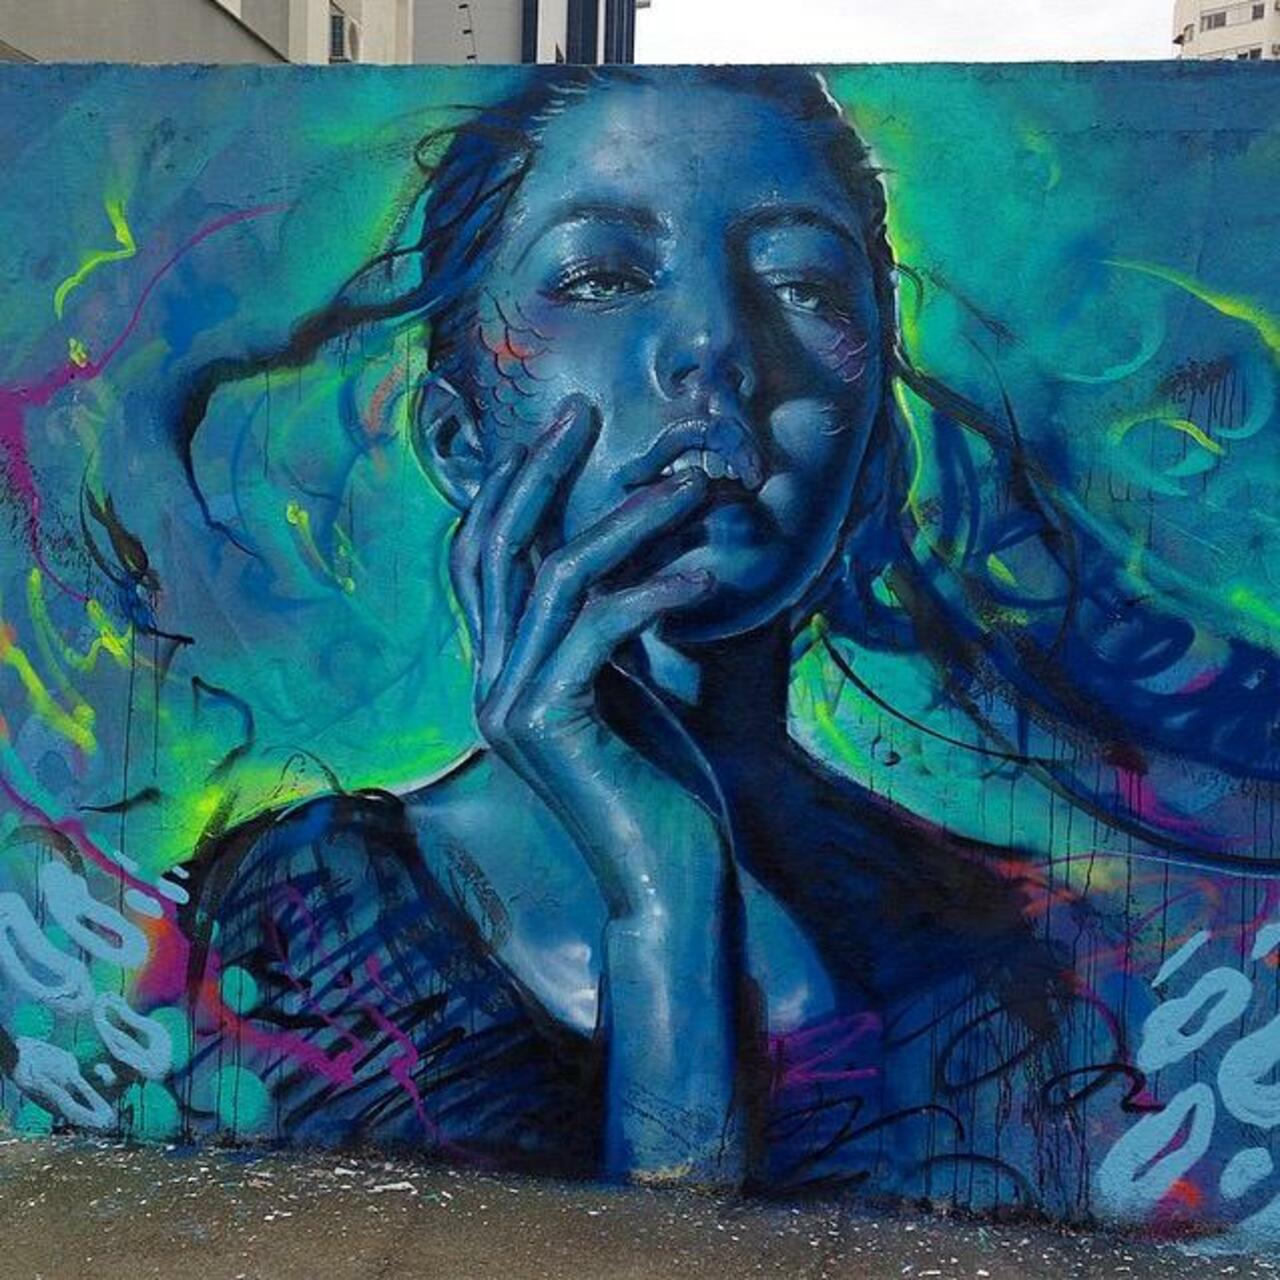 Thiago Valdi new Street Art piece titled 'Day Dreamer'

#art #mural #graffiti #streetart http://t.co/I78zr4g2UR